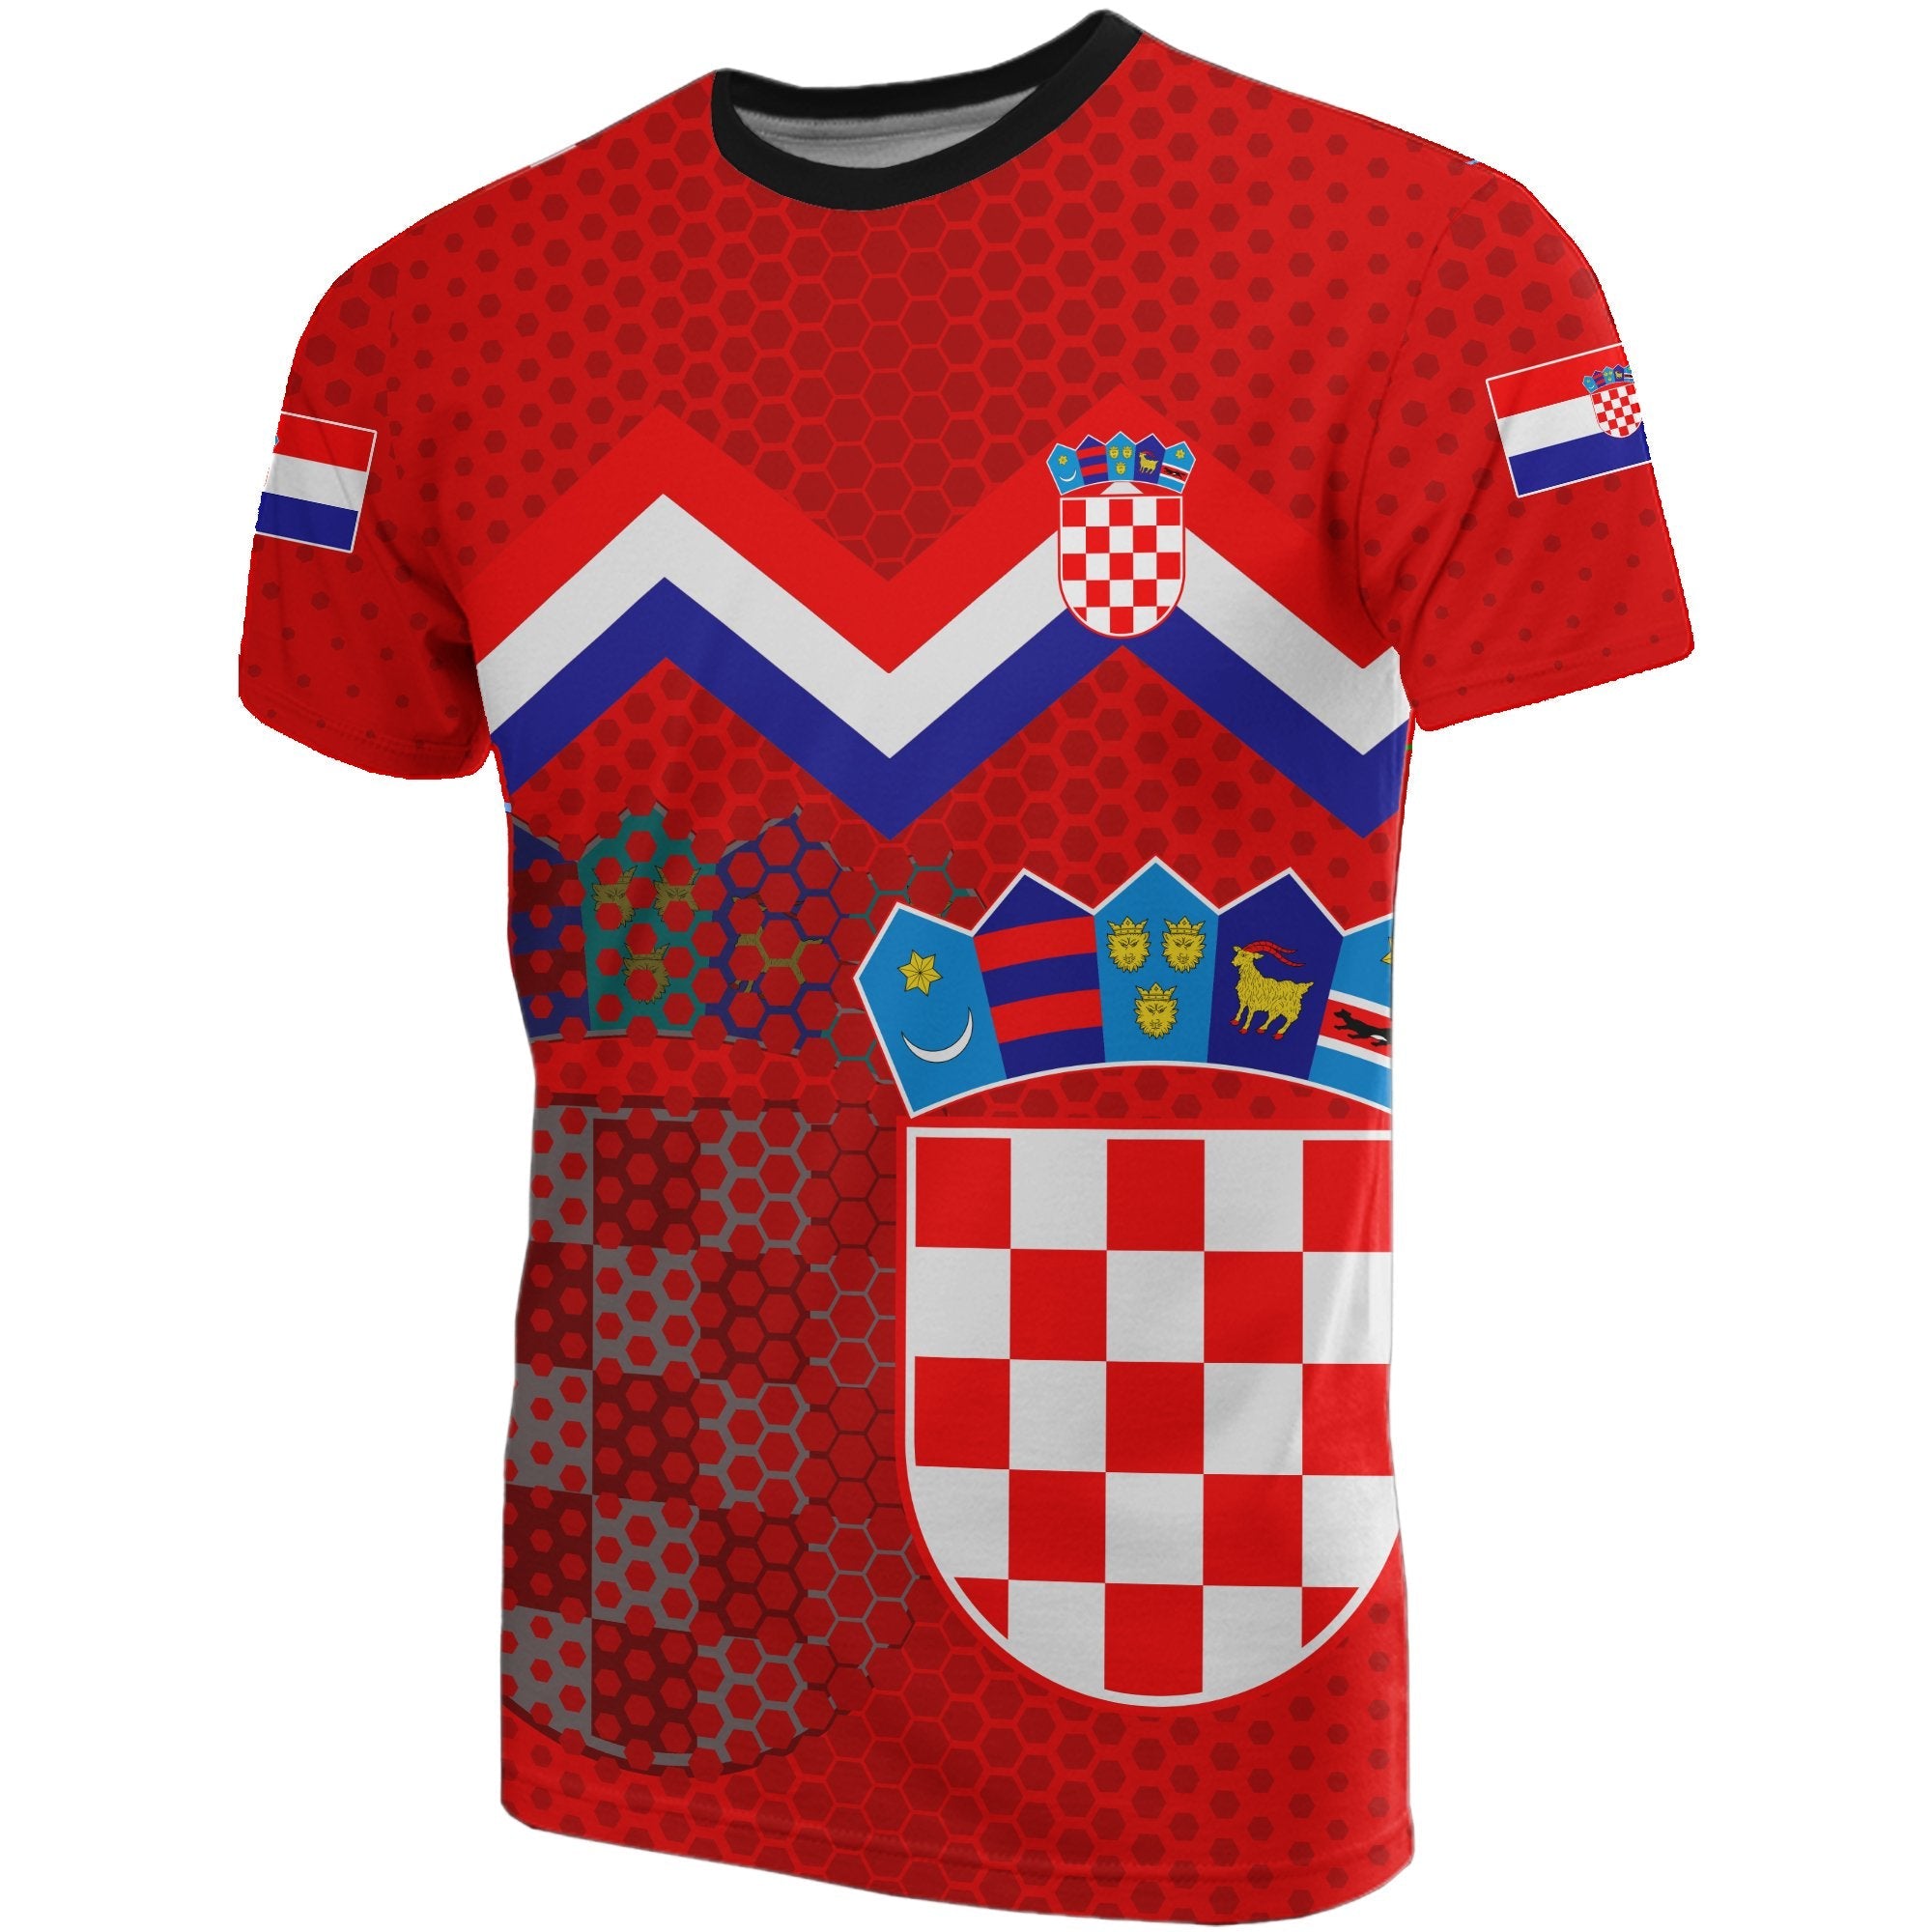 hrvatska-croatia-coat-of-arms-t-shirt-orange